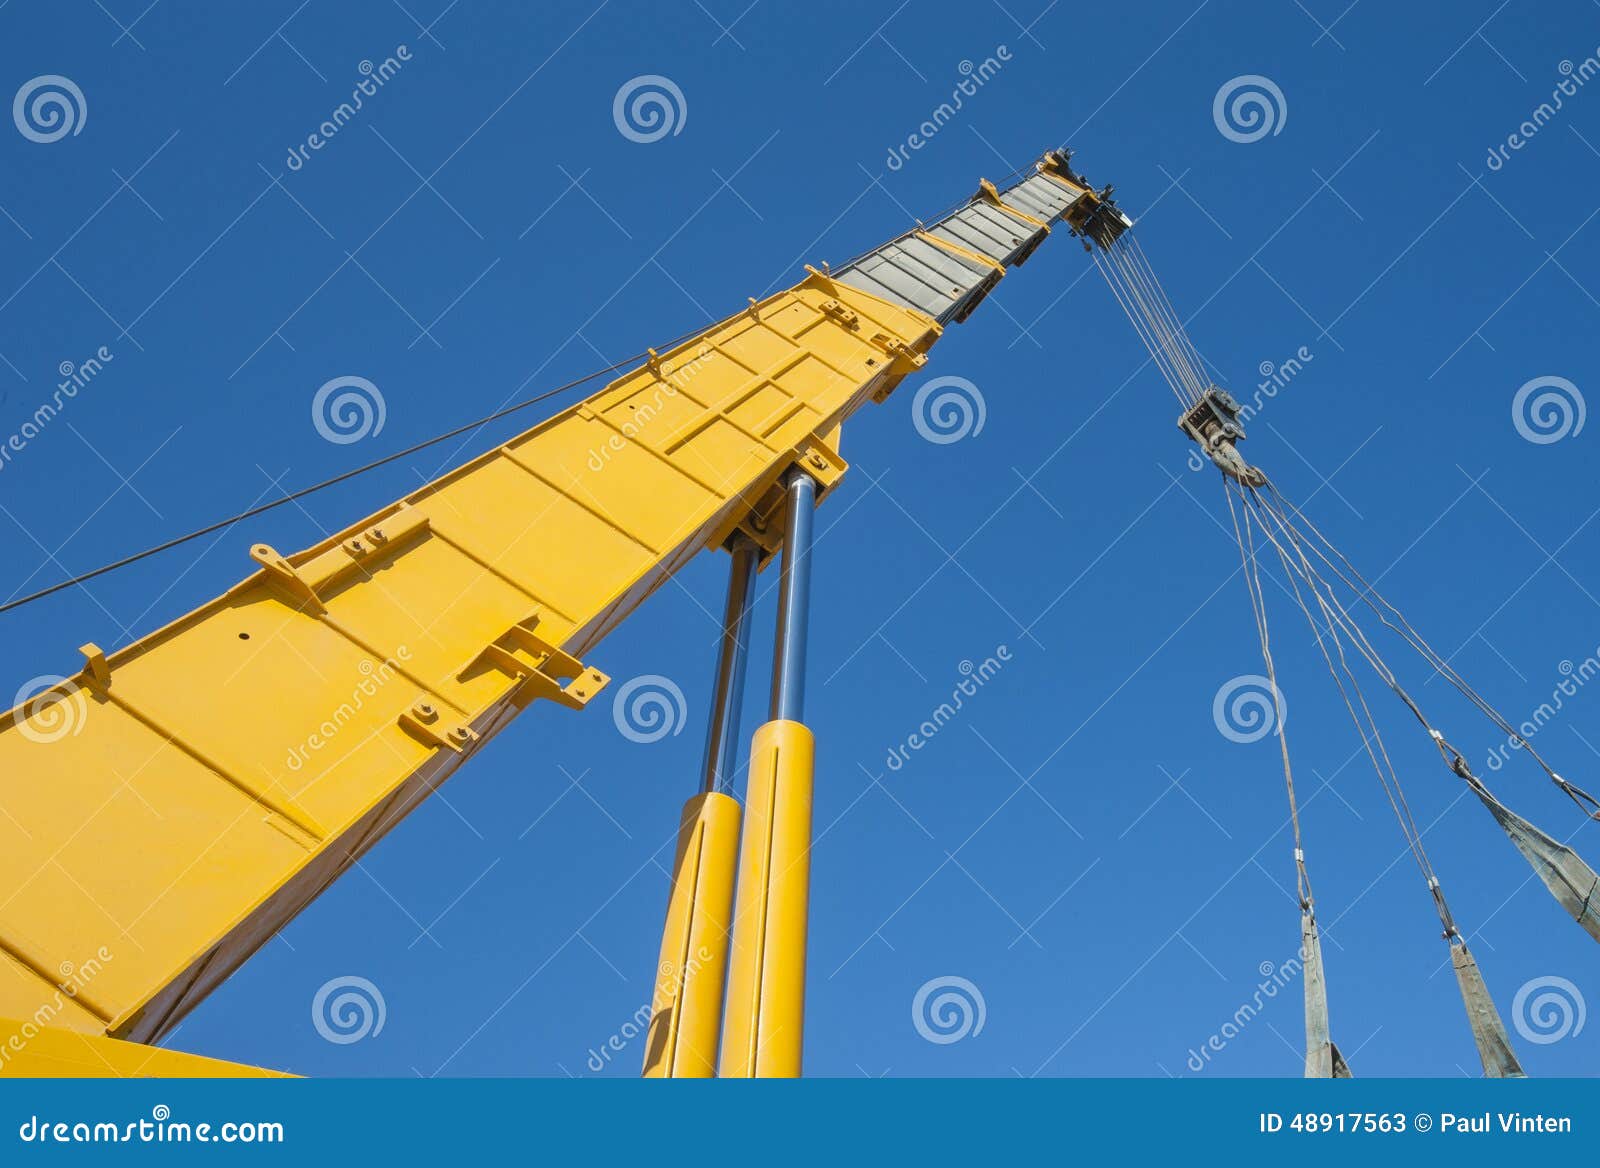 large crane jib against blue sky background